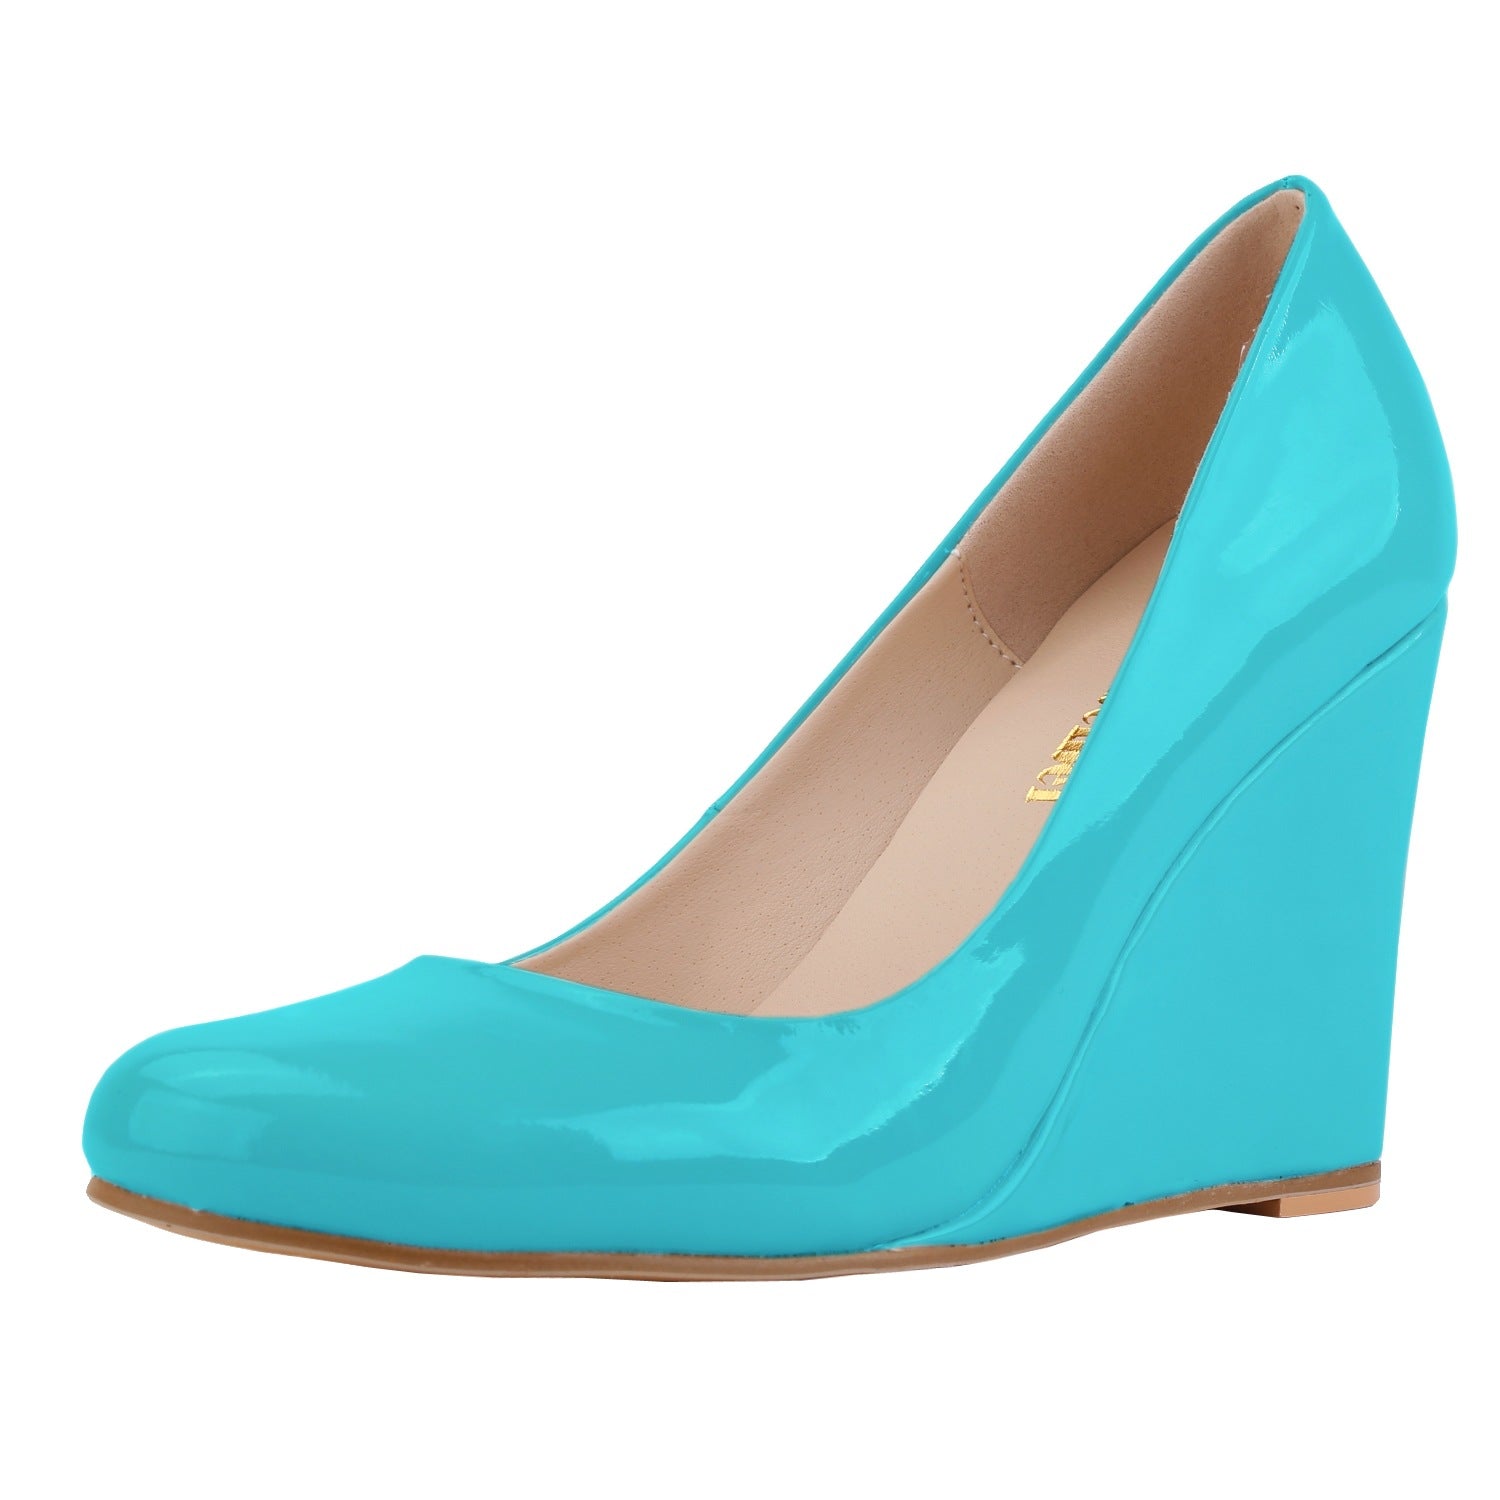 PU patent leather wedge heels pumps 10+ colors candy color pumps